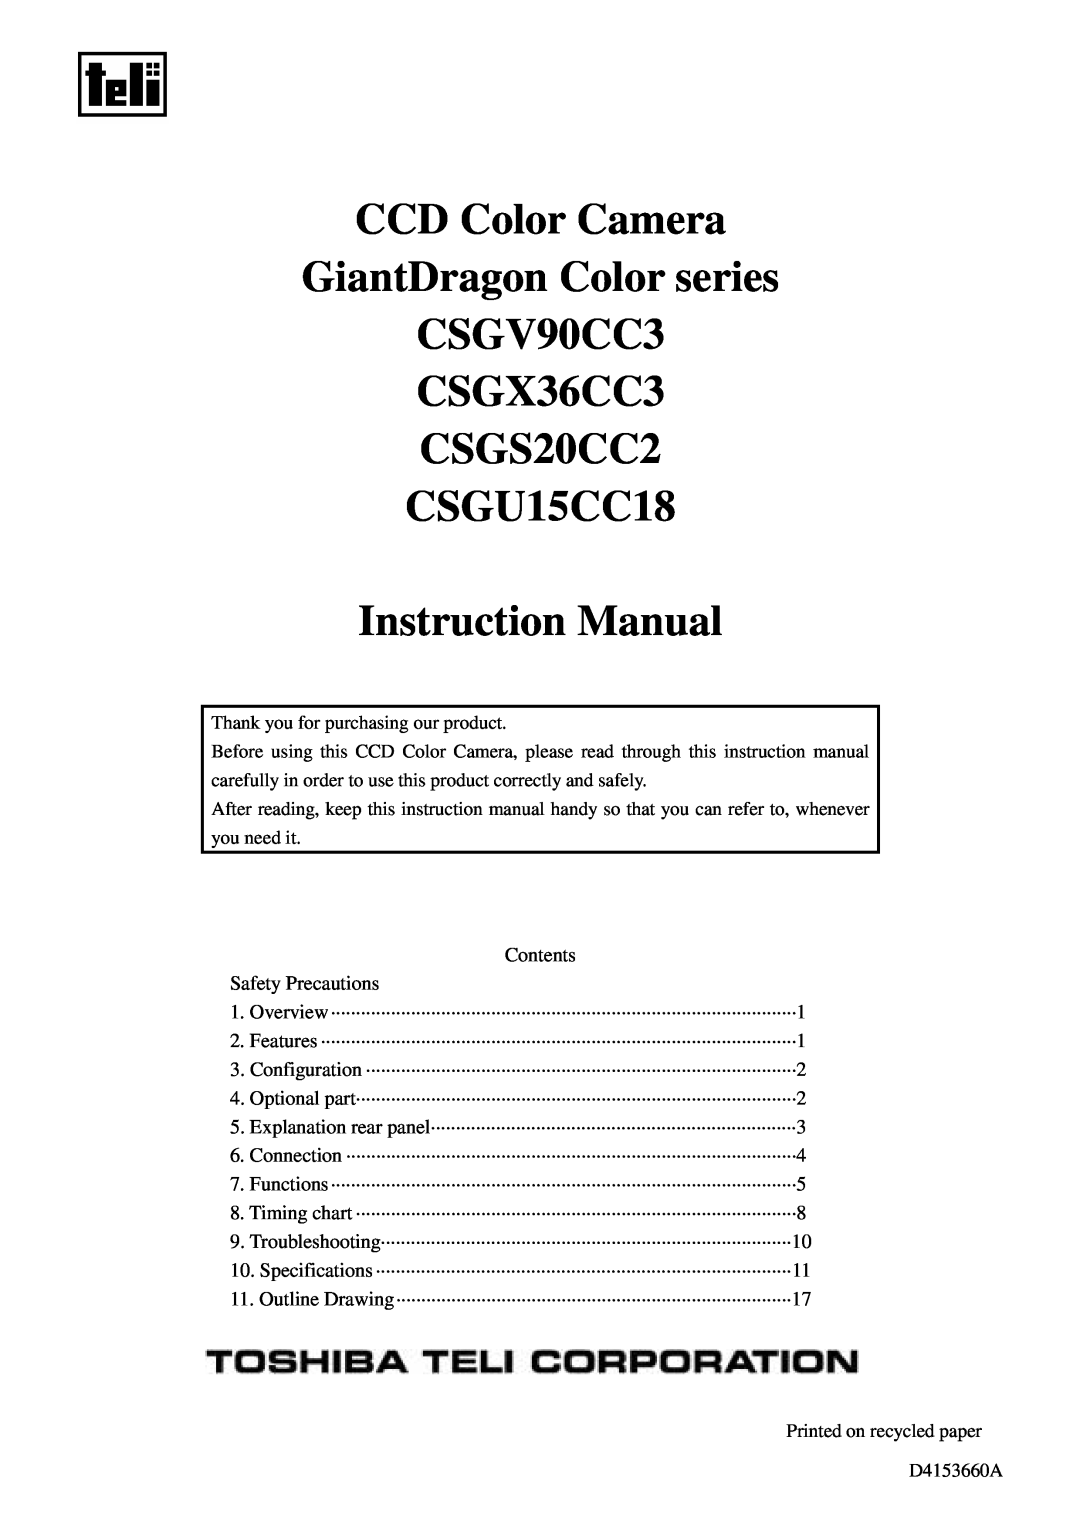 Toshiba CSGU15CC18, CSGS20CC2 instruction manual CCD Color Camera GiantDragon Color series CSGV90CC3 CSGX36CC3 